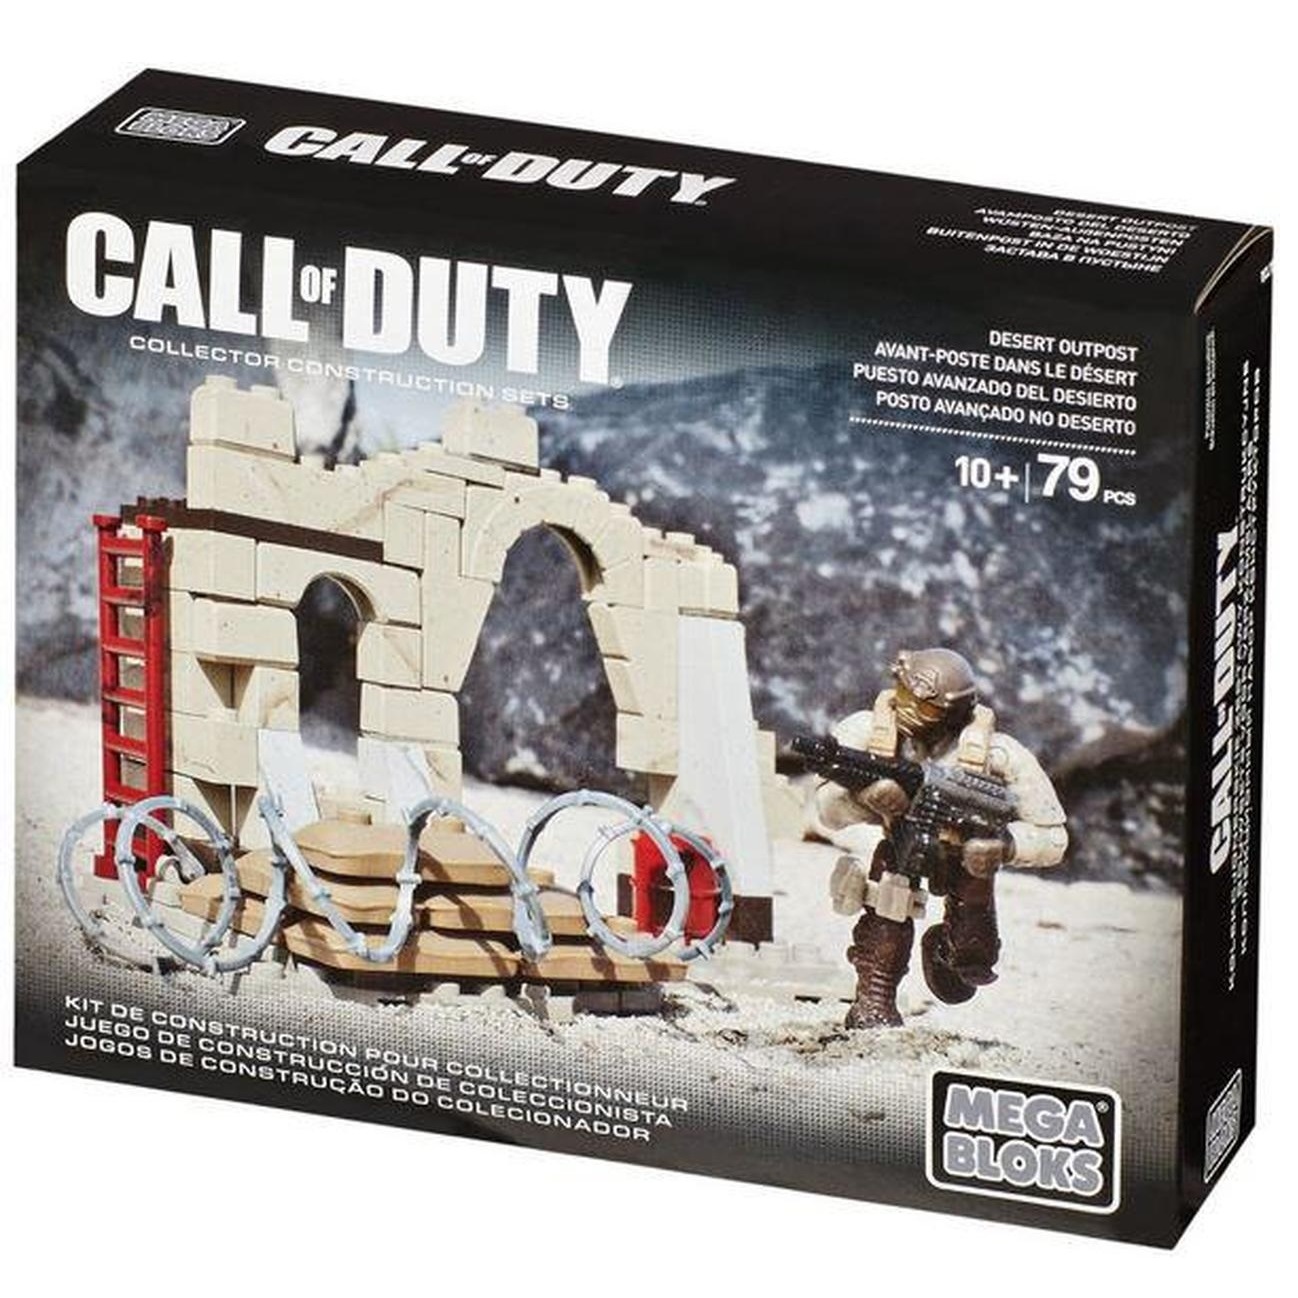 ساختنی مگابلاکس مدل Call Of Duty کد 06846